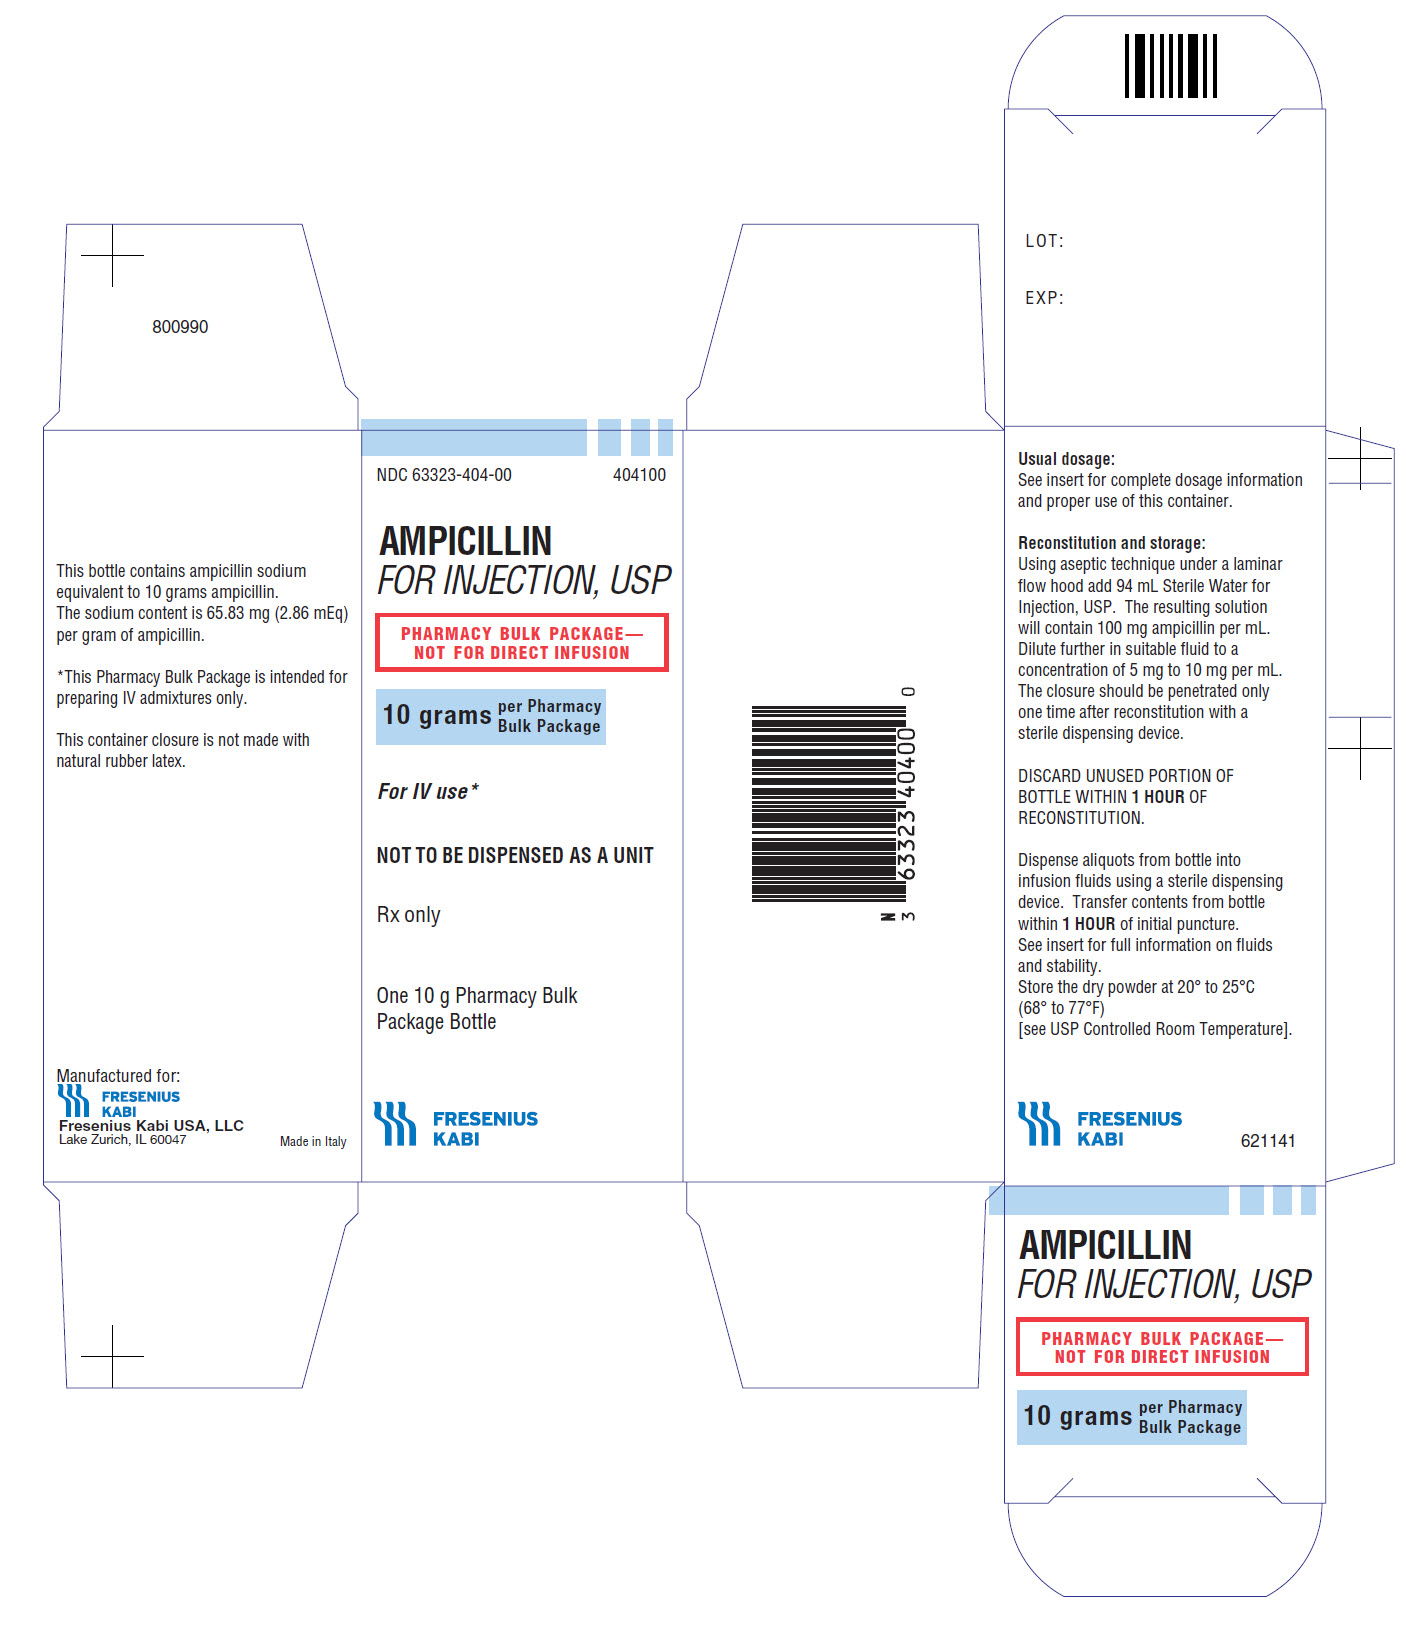 Ampicillin for Injection, USP 10 g carton label